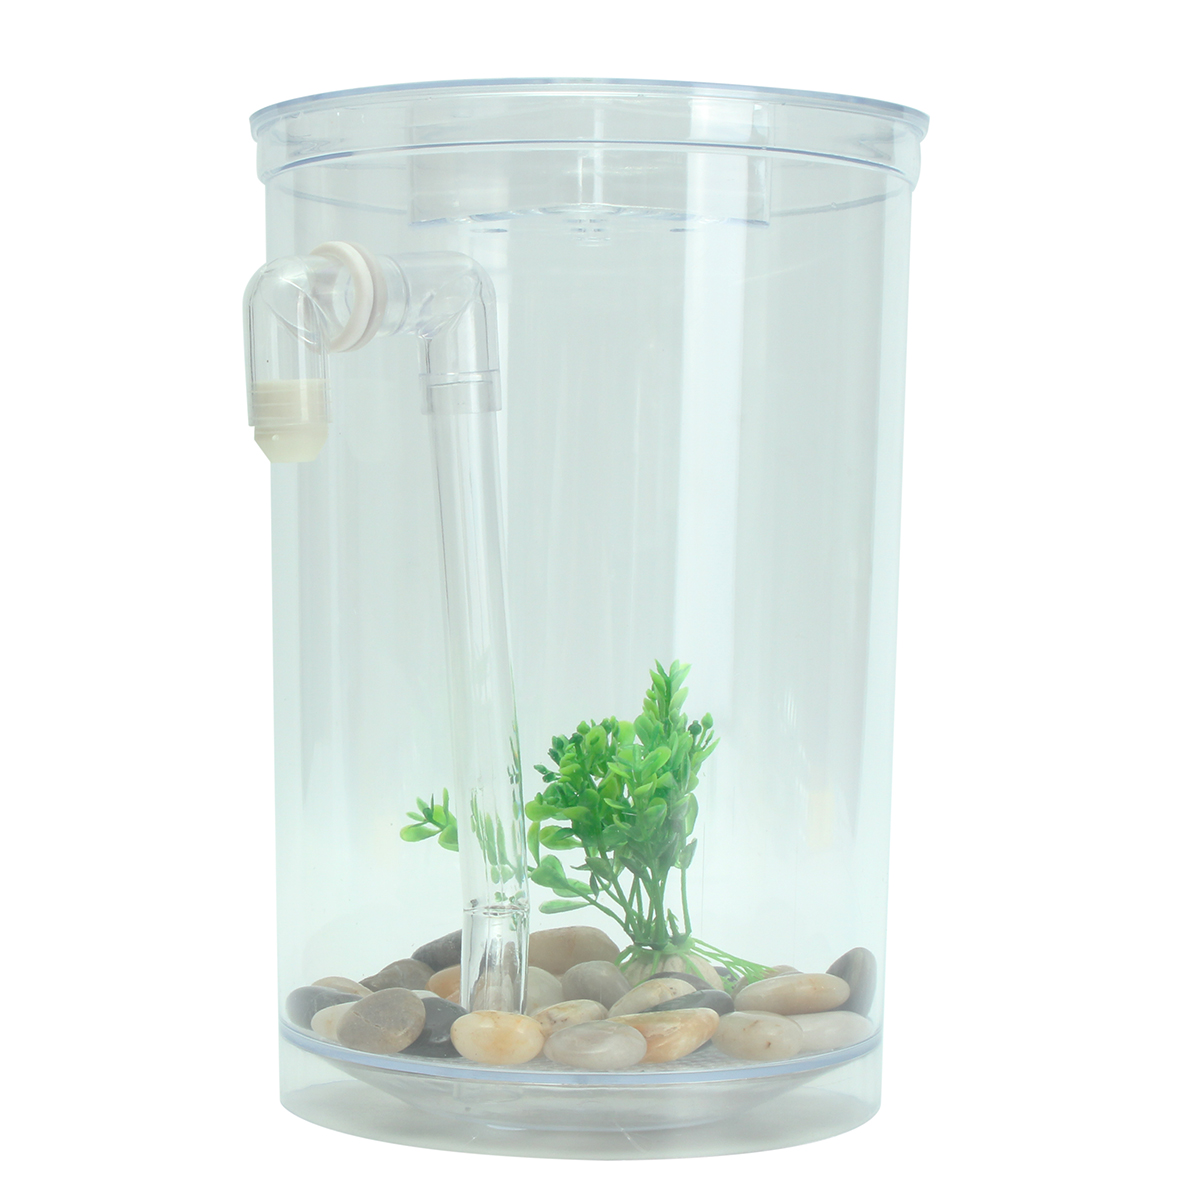 

Ecological Cylindrical Miniature Plastic White Fish Tank Desktop Decor Fishing Kits